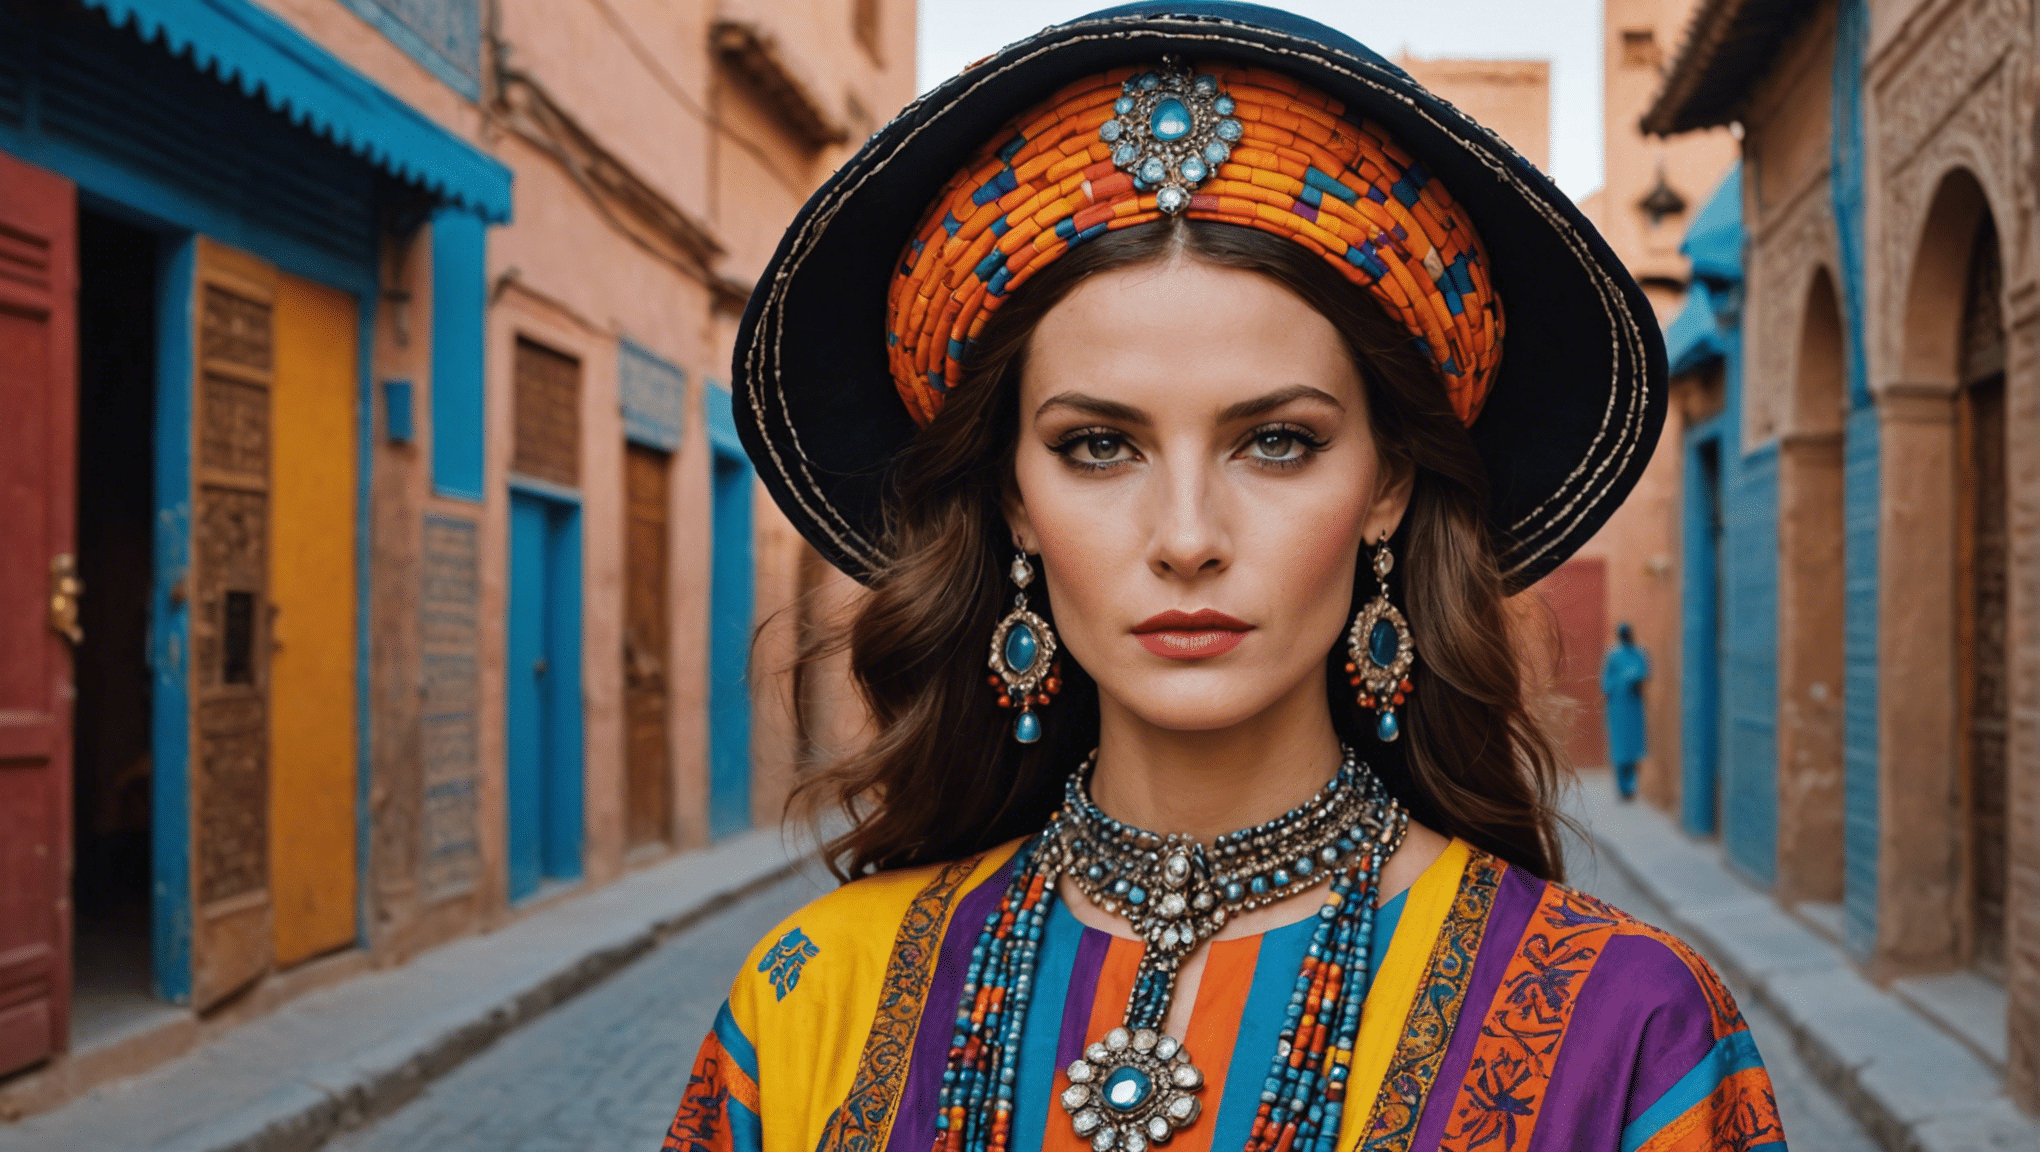 Descubra la inspiración de moda de Yves Saint Laurent en la exótica belleza de Marrakech